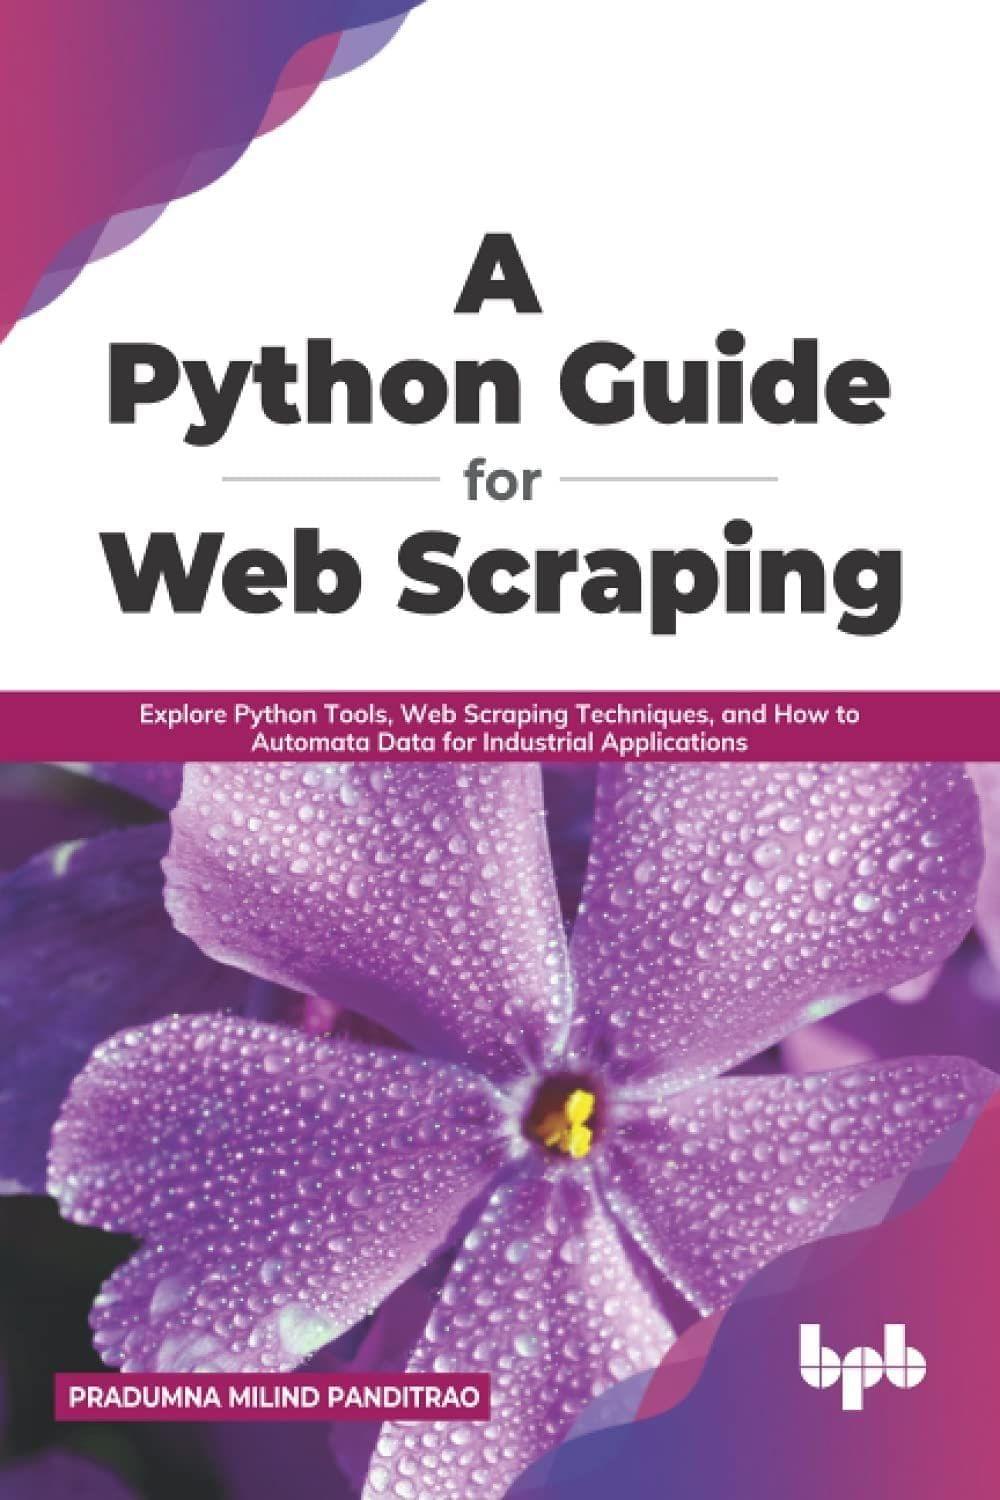 Python Guide for Web Scraping [Paperback] Pradumna Milind Panditrao